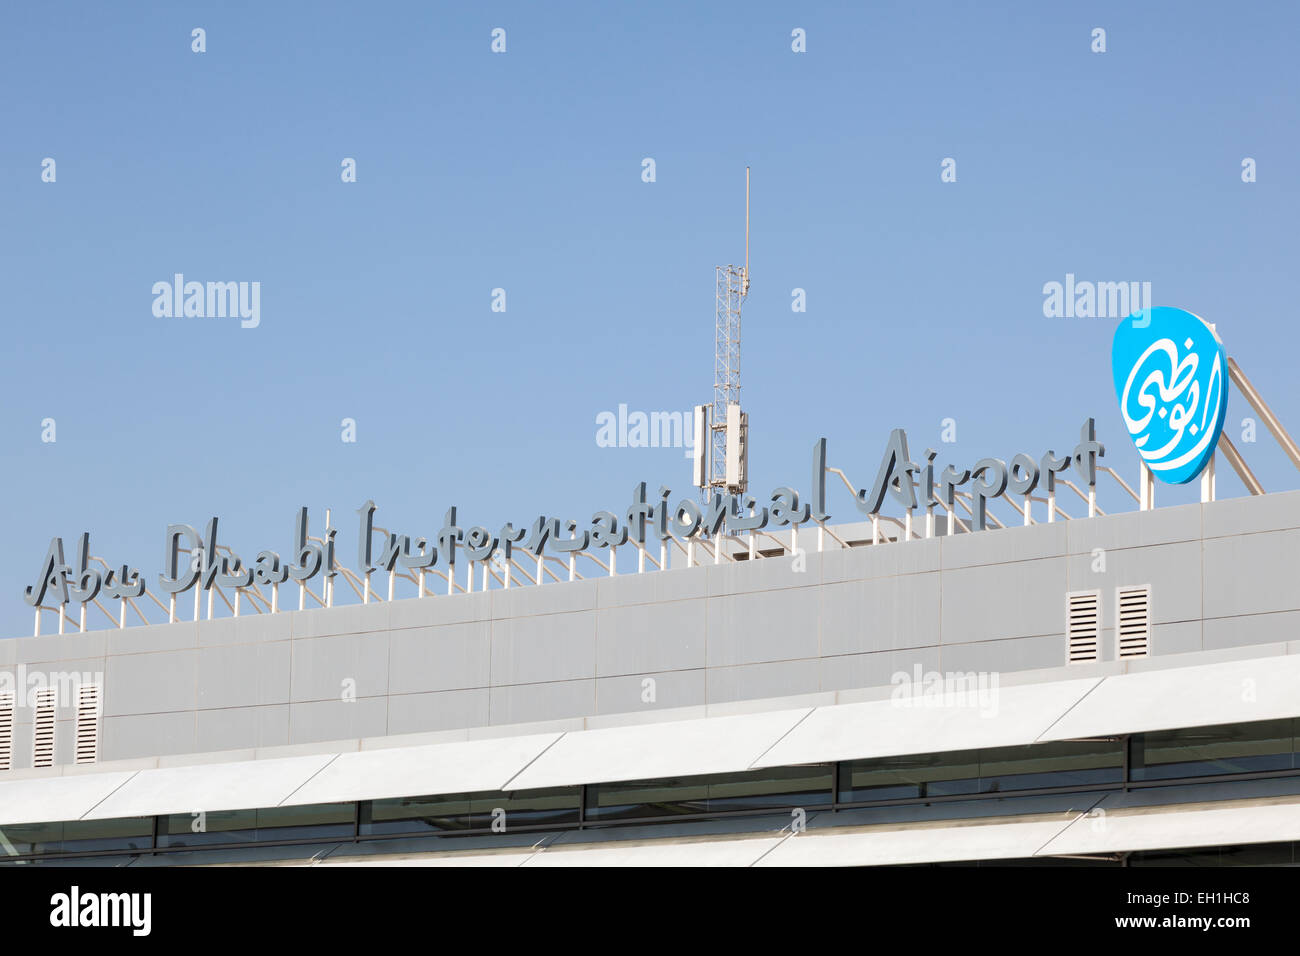 Abu Dhabi International Airport. December 19, 2014 in Abu Dhabi, United Arab Emirates Stock Photo